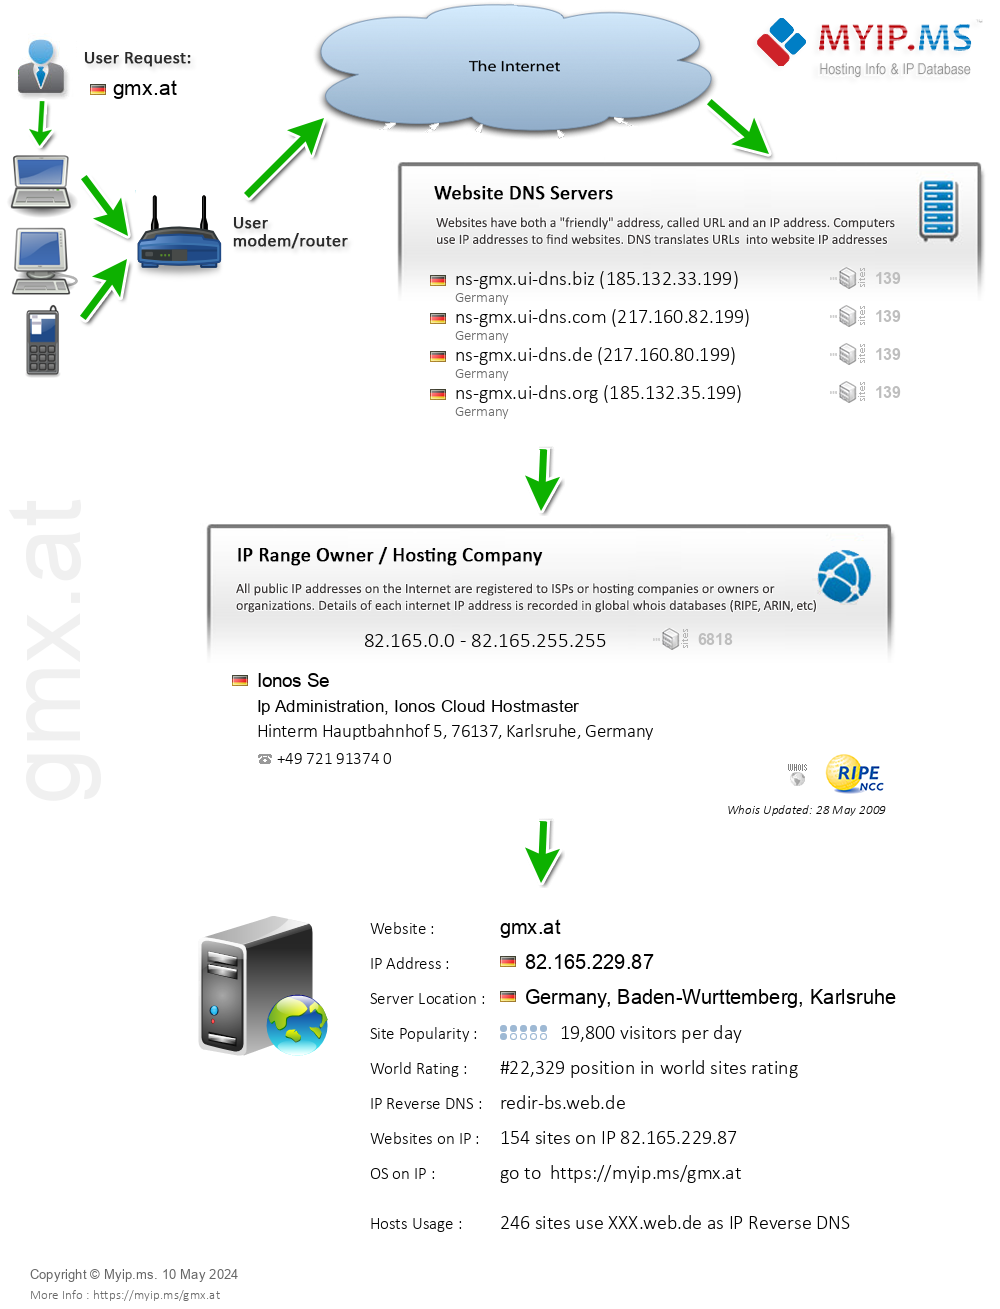 Gmx.at - Website Hosting Visual IP Diagram